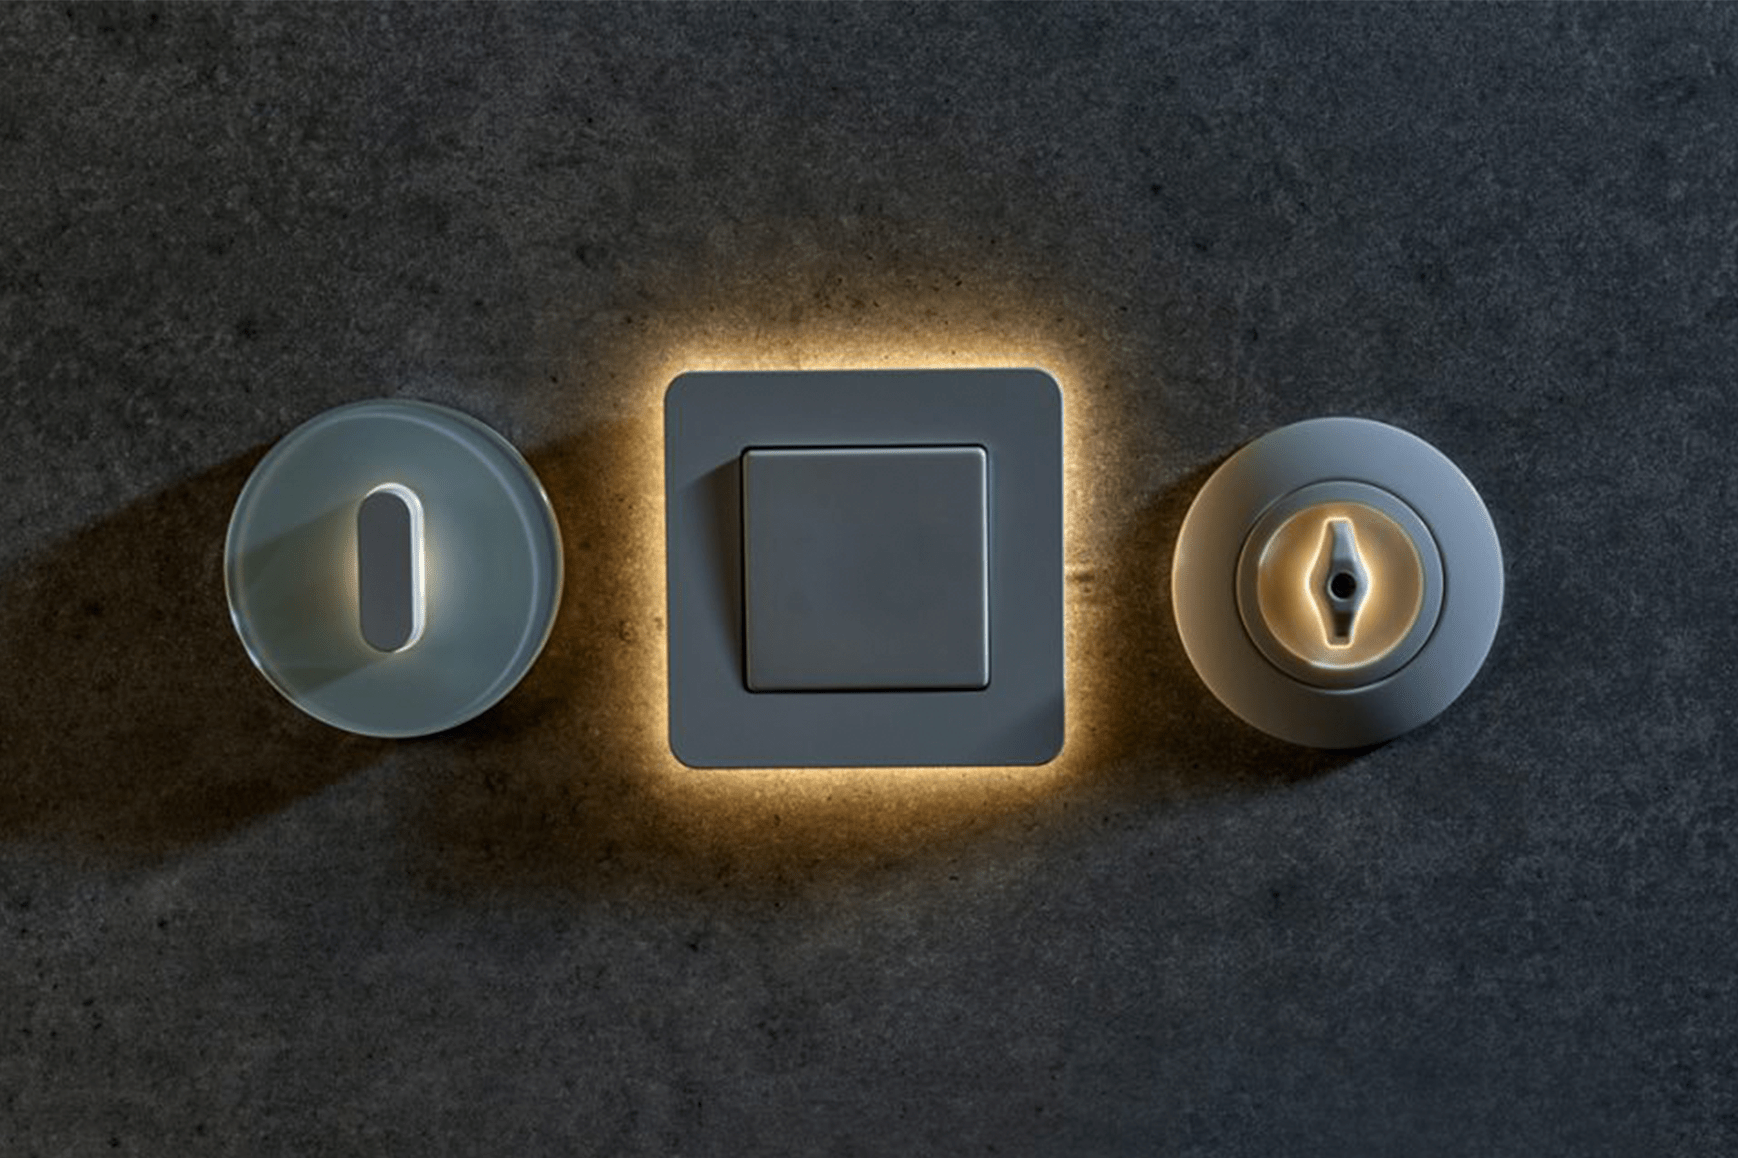 Mentor light guides in Berker's Illuminated switch series